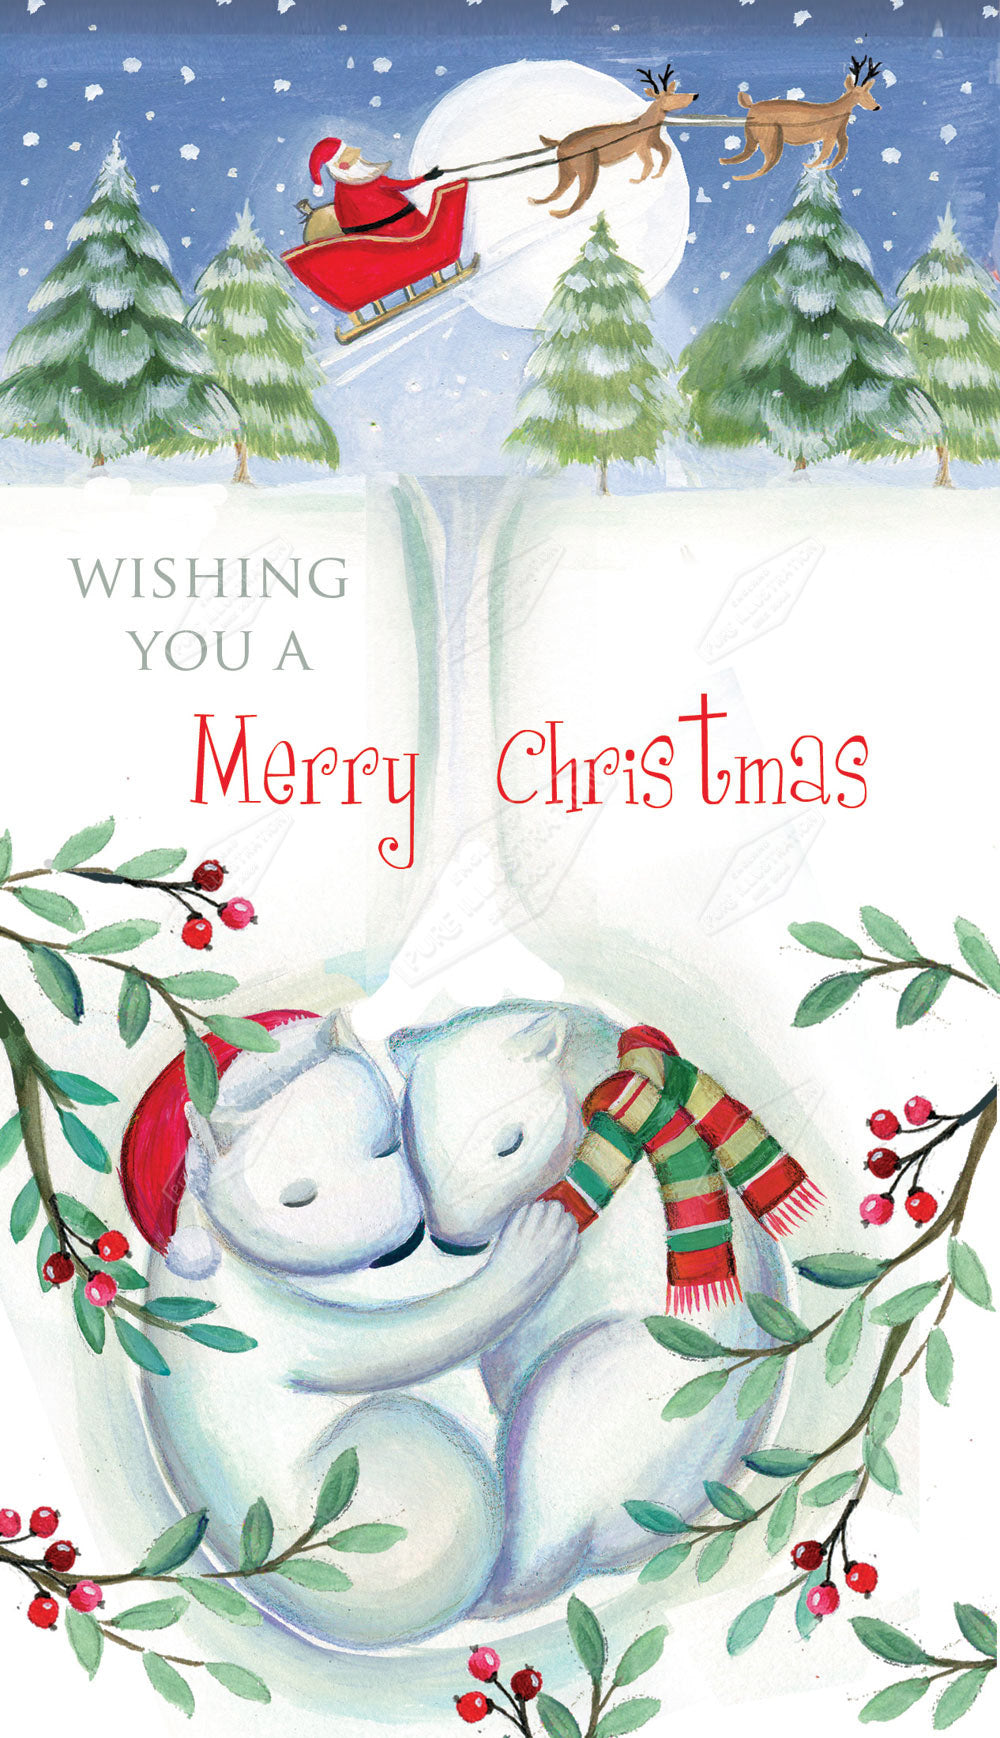 00022676DEV - Deva Evans is represented by Pure Art Licensing Agency - Christmas Greeting Card Design